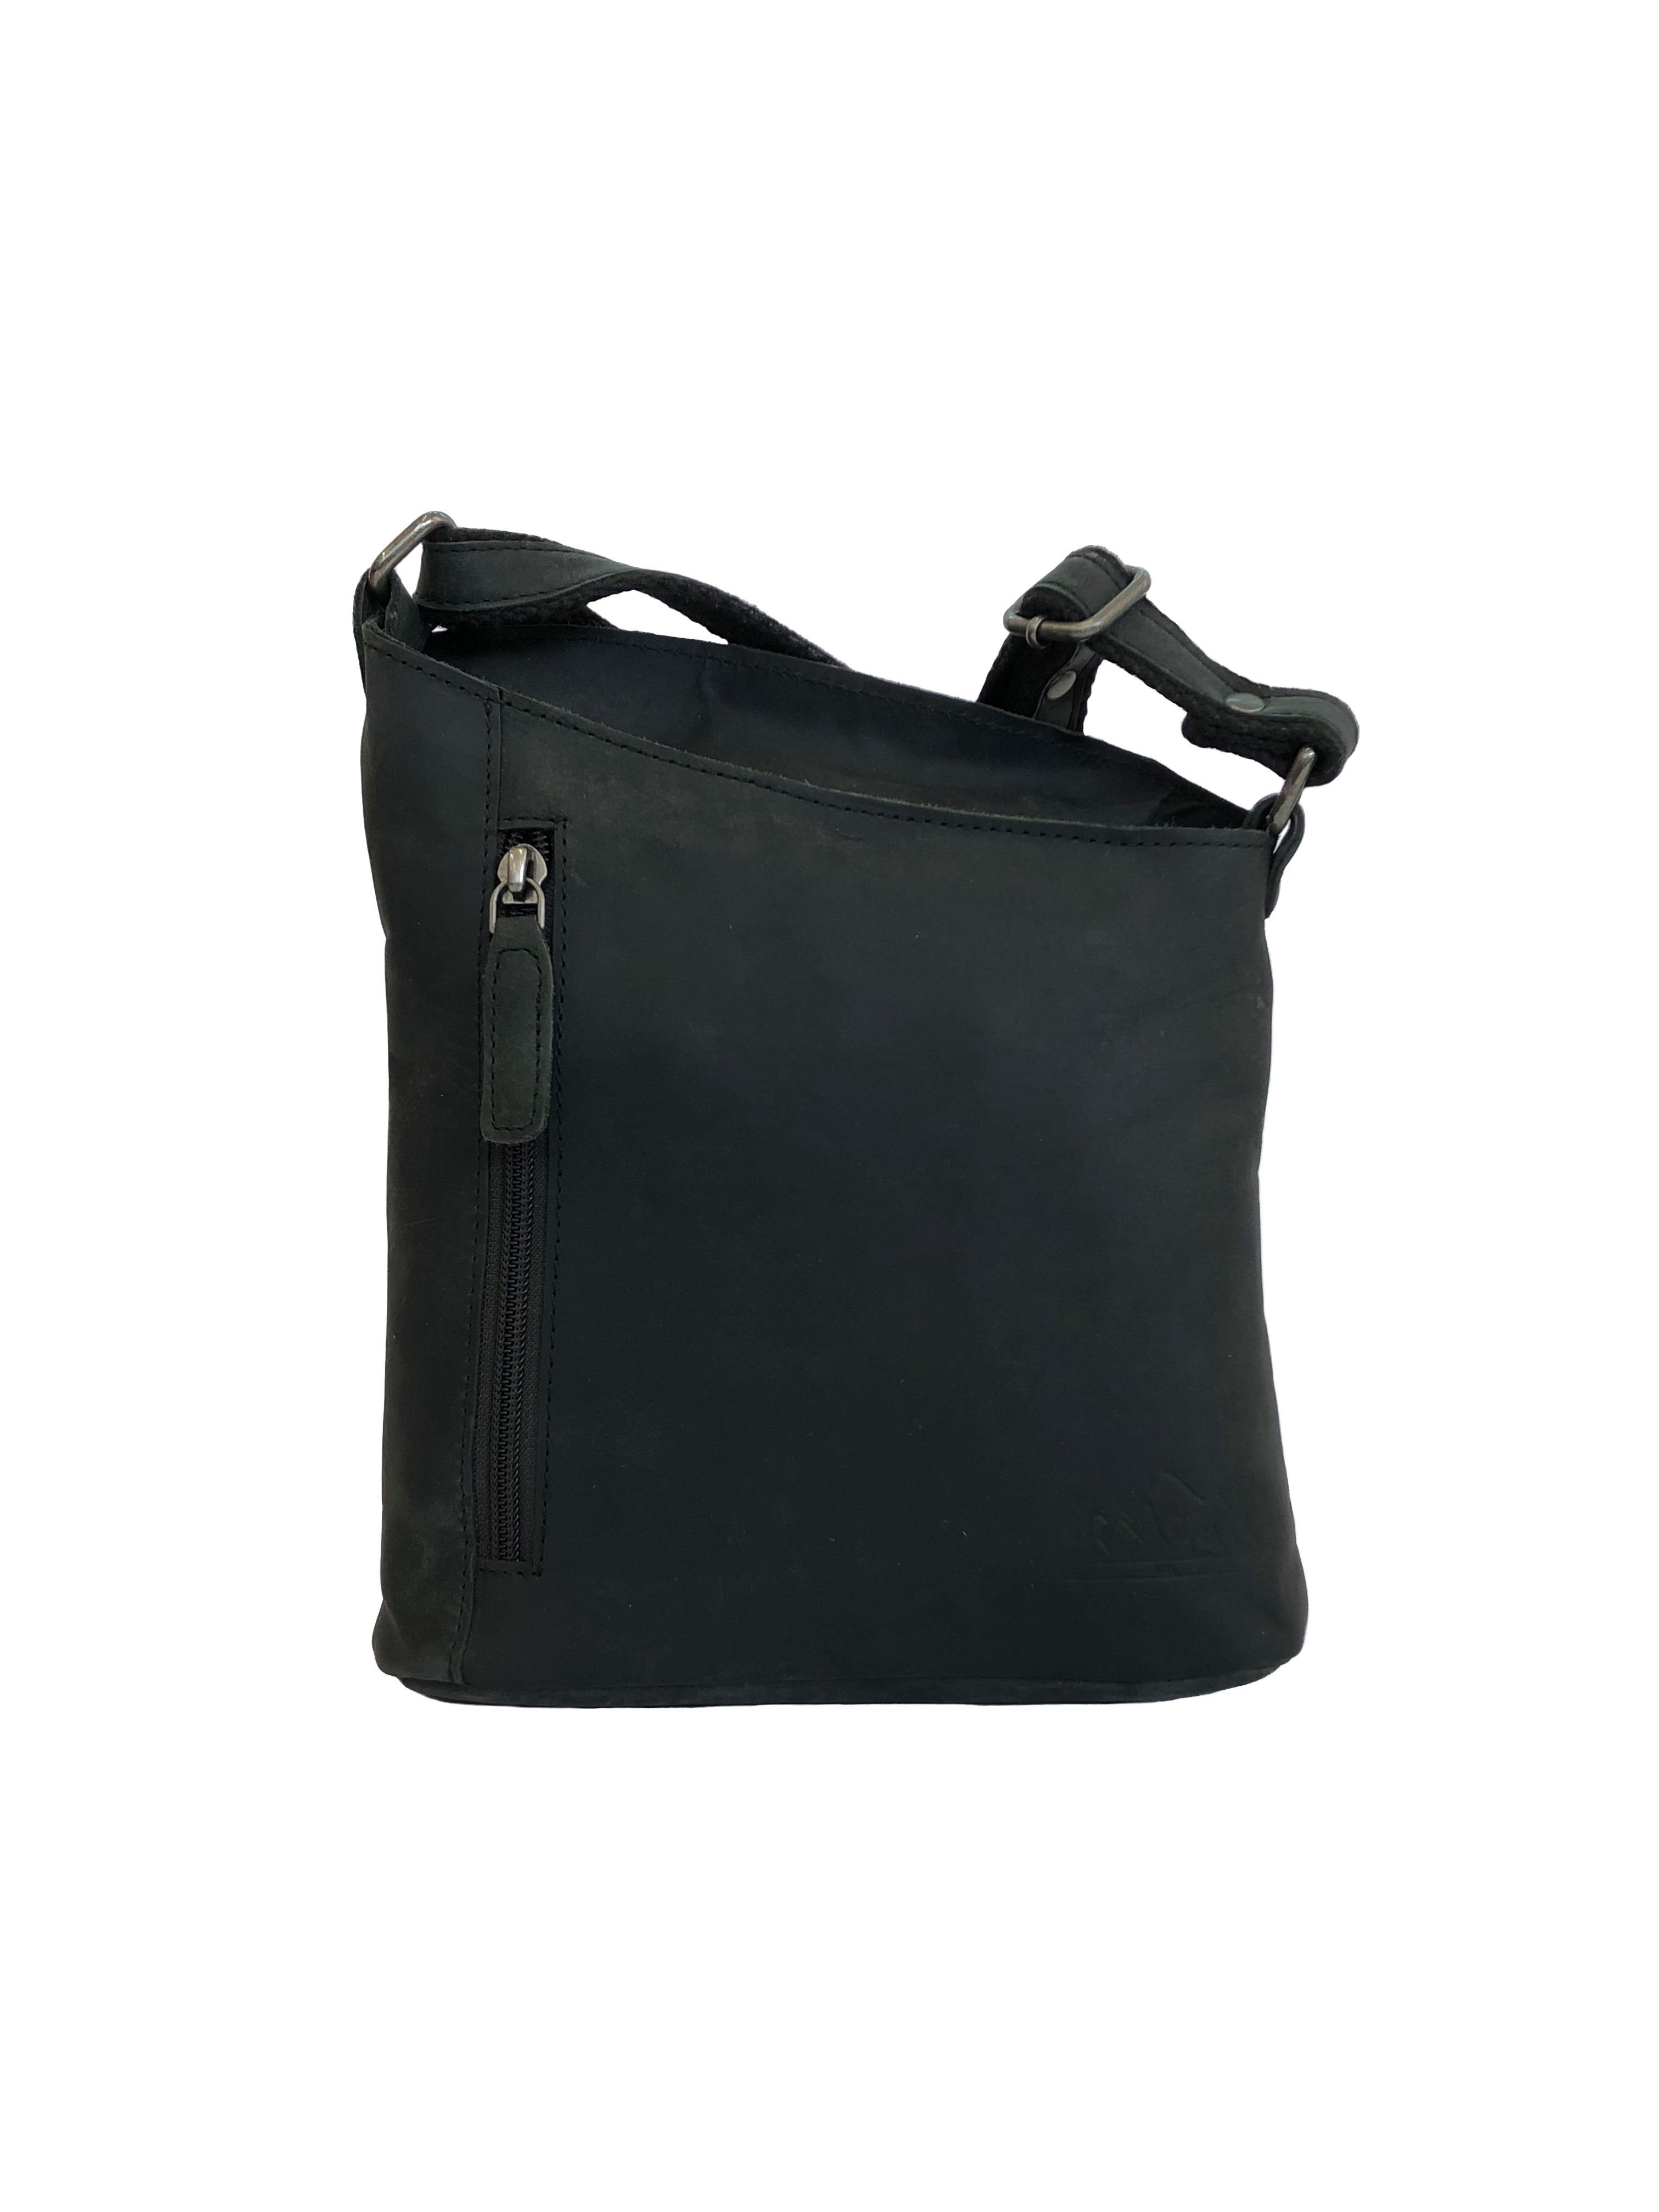 [Japanisches limitiertes Modell] Bayern Bag Handtasche Ledertasche Vintage Bag Umhängetasche PAULA, Crossbody Black